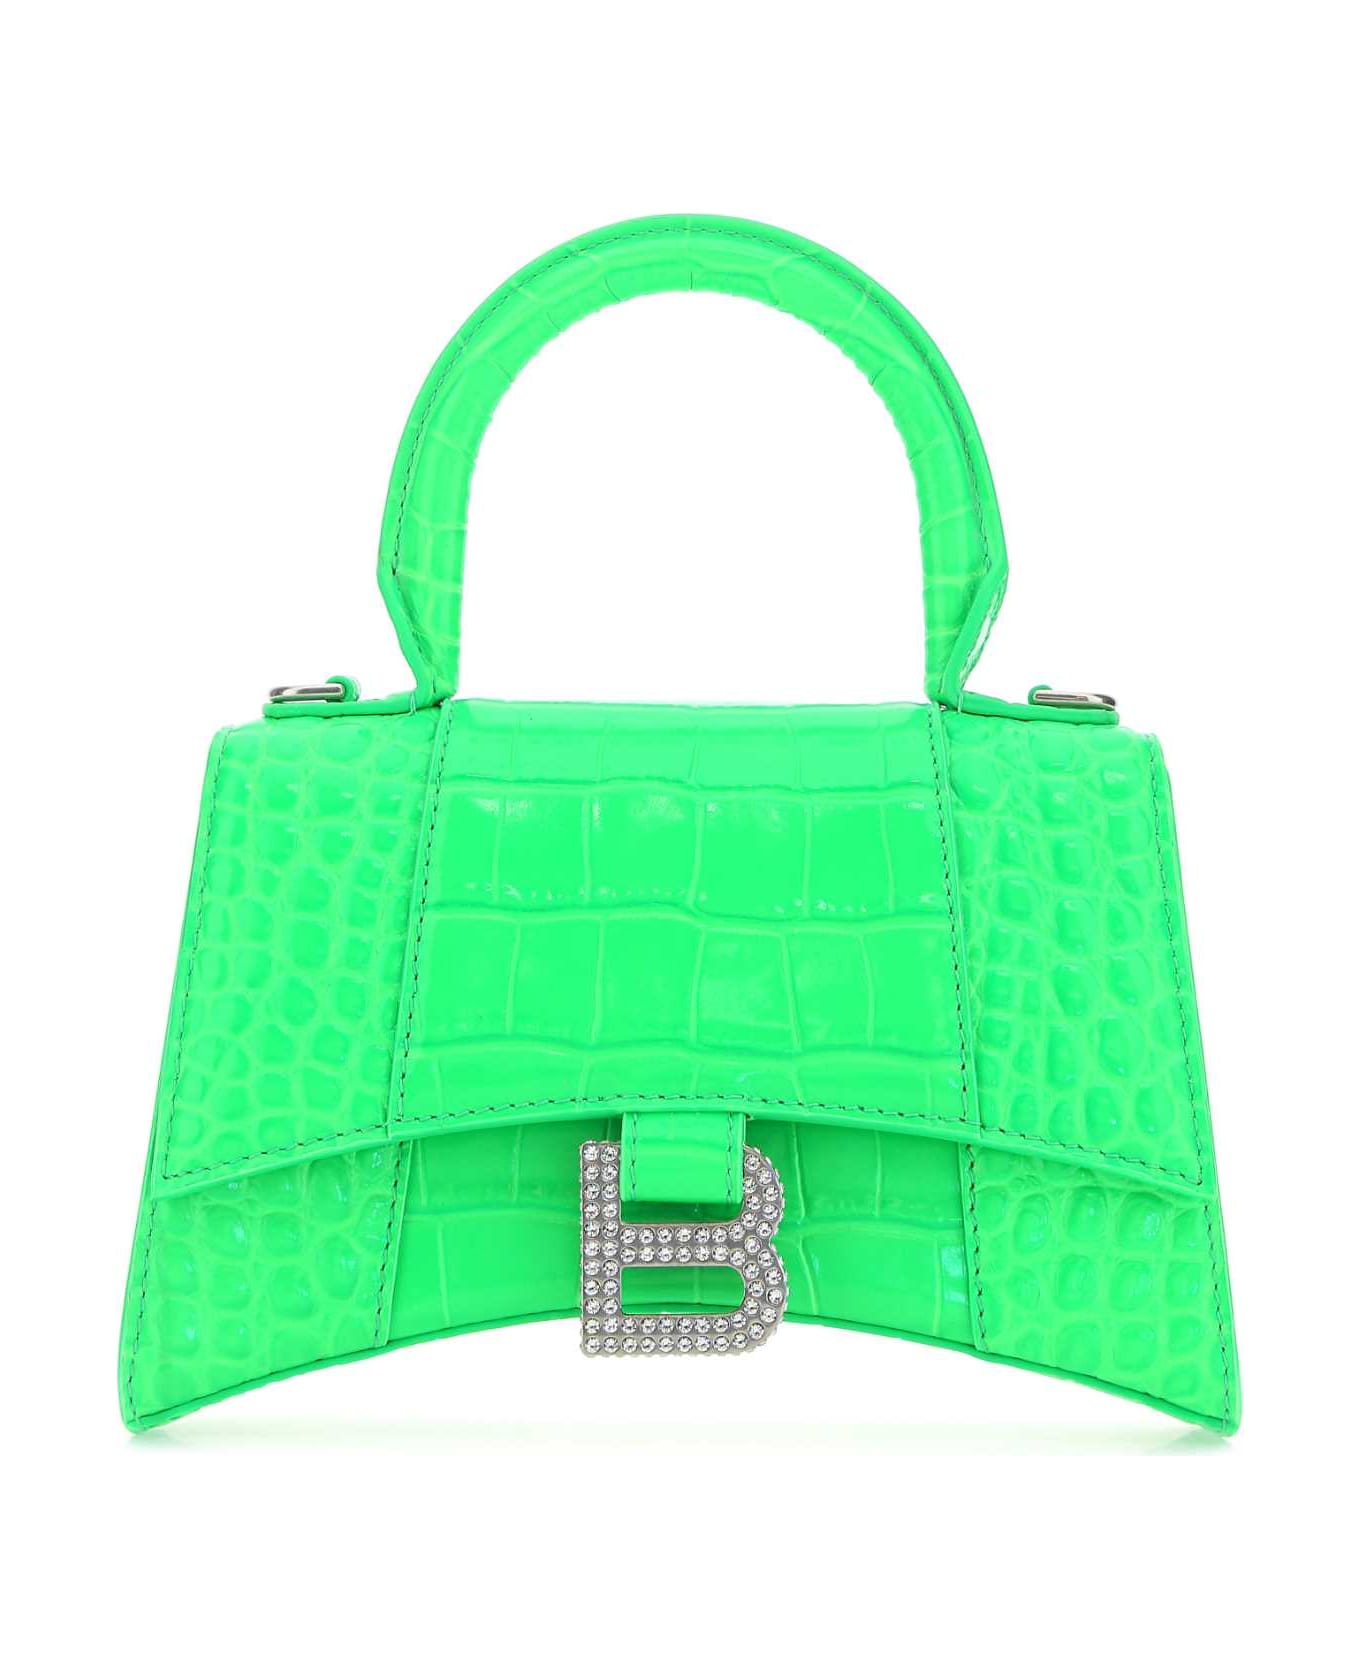 Balenciaga Fluo Green Leather Hourglass Xs Handbag - 3810 トートバッグ